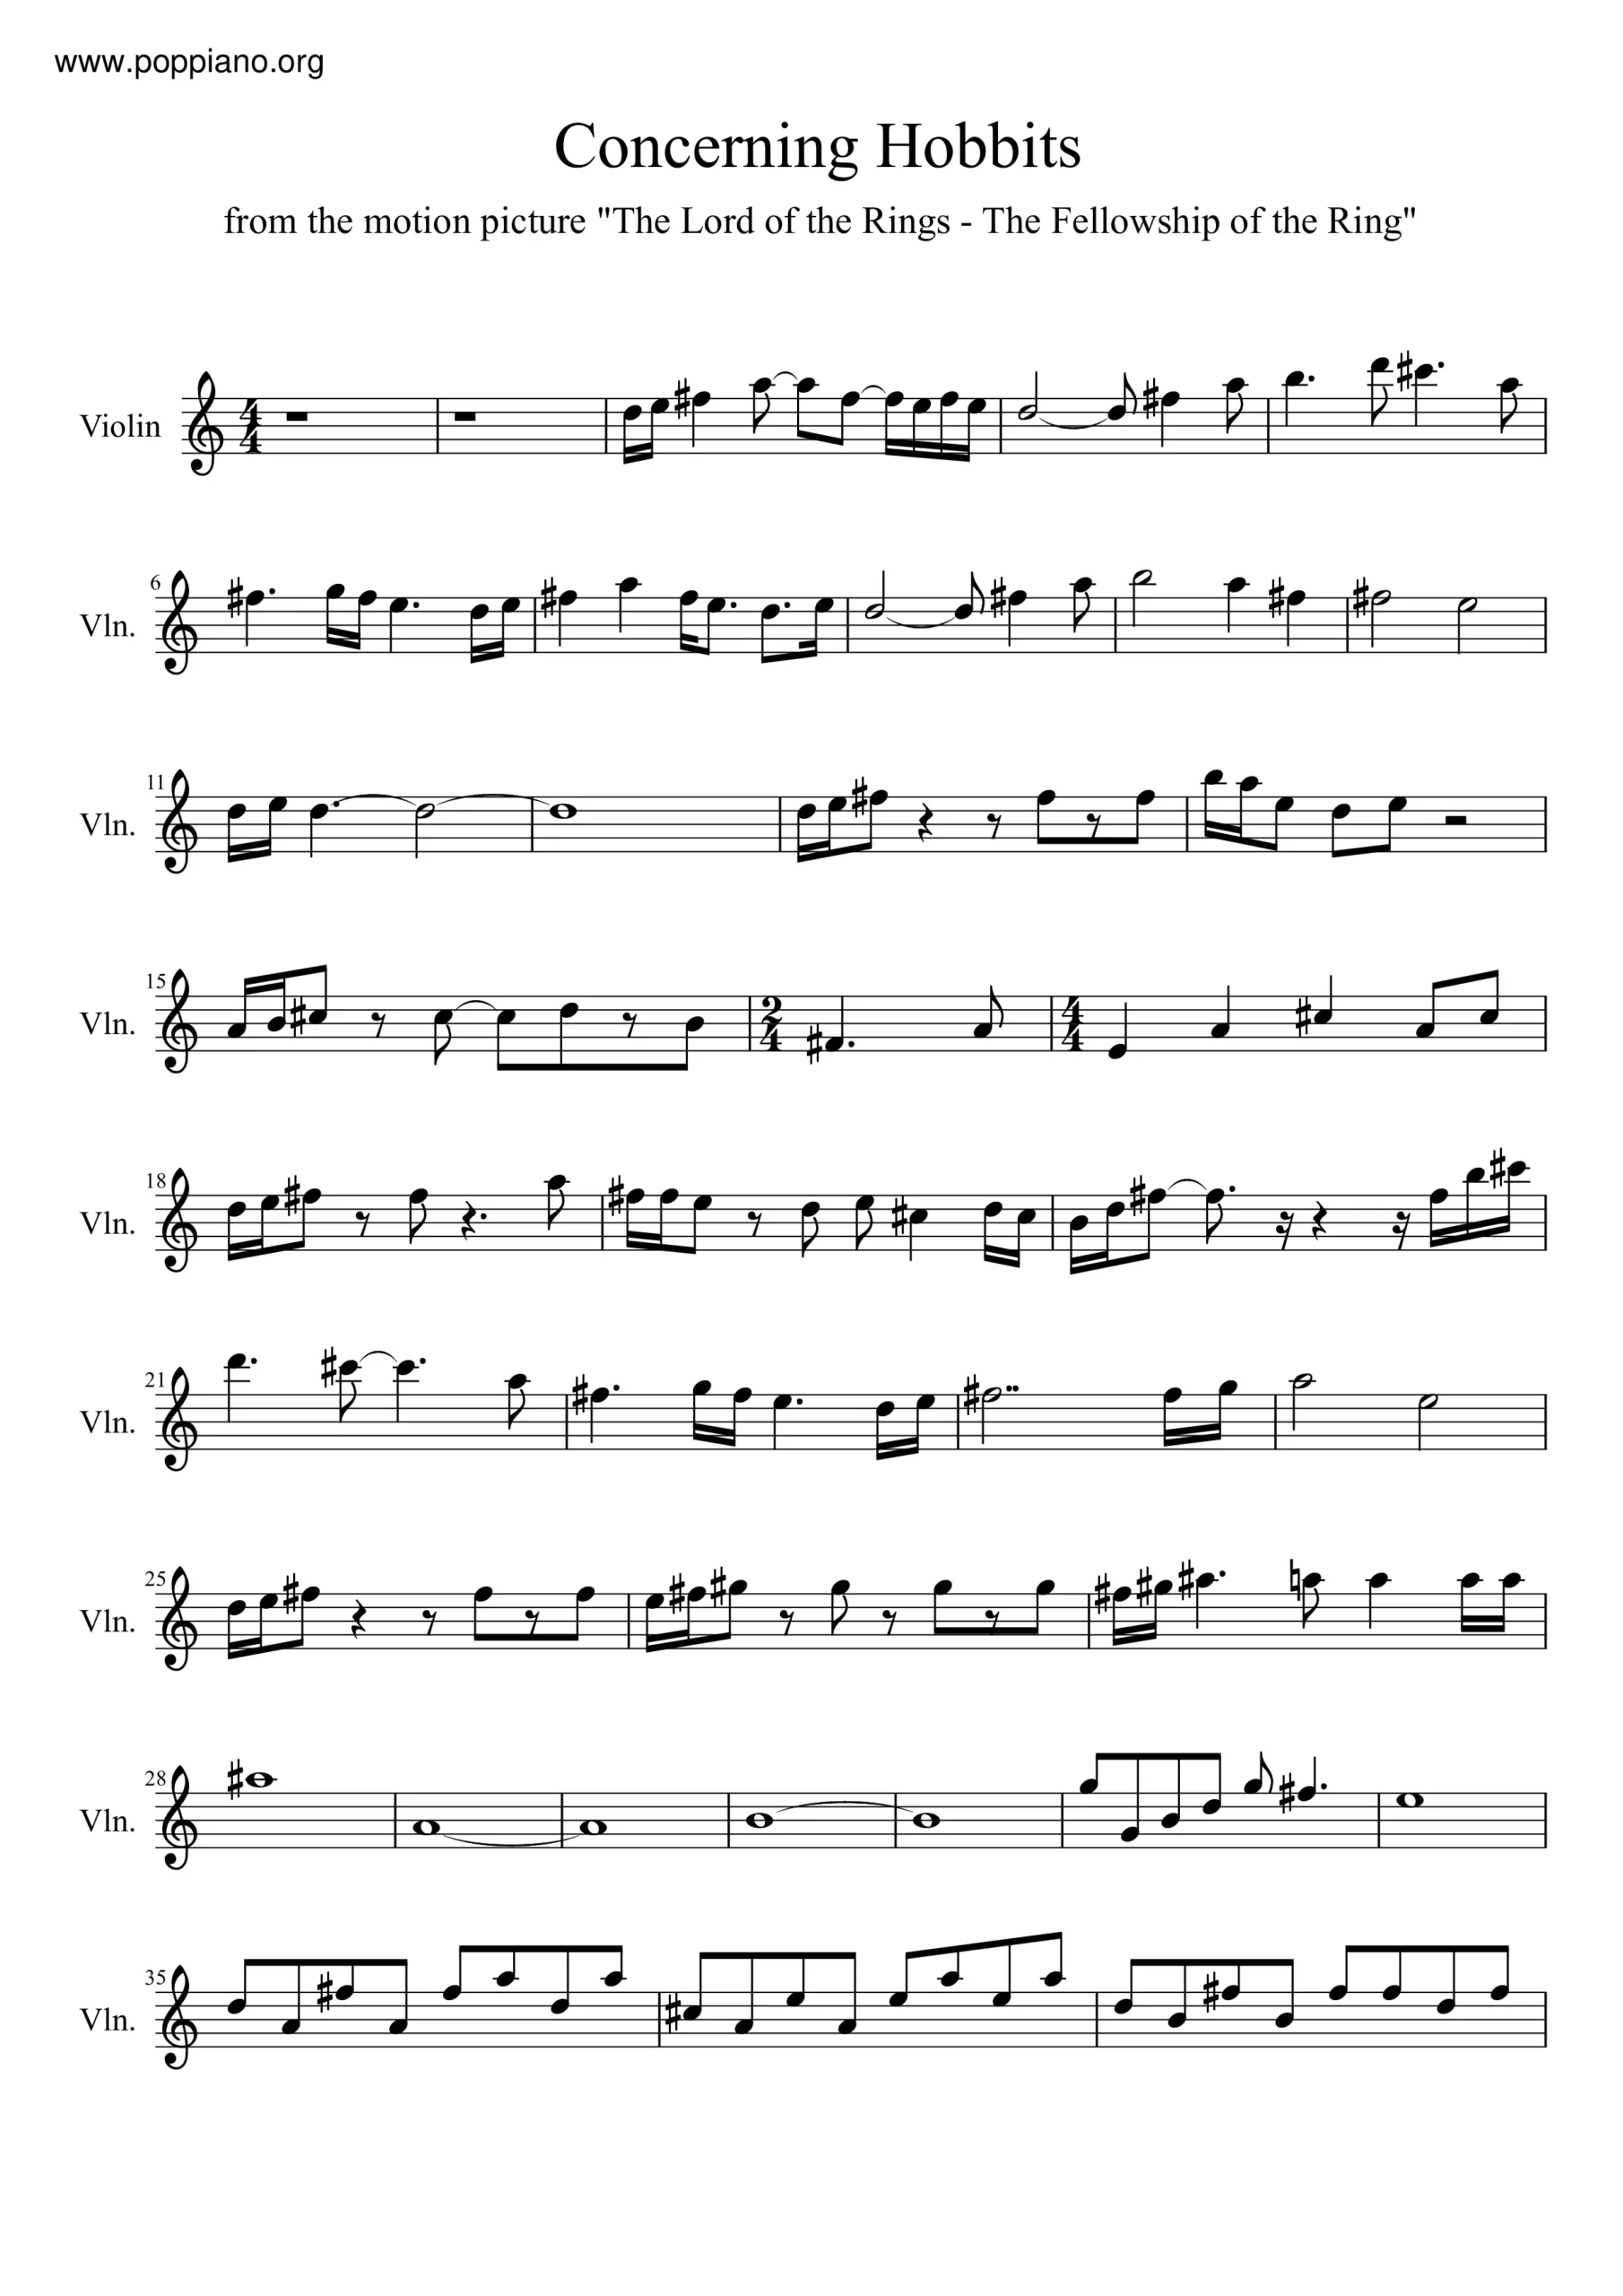 concerning hobbits violin - When was Concerning Hobbits written